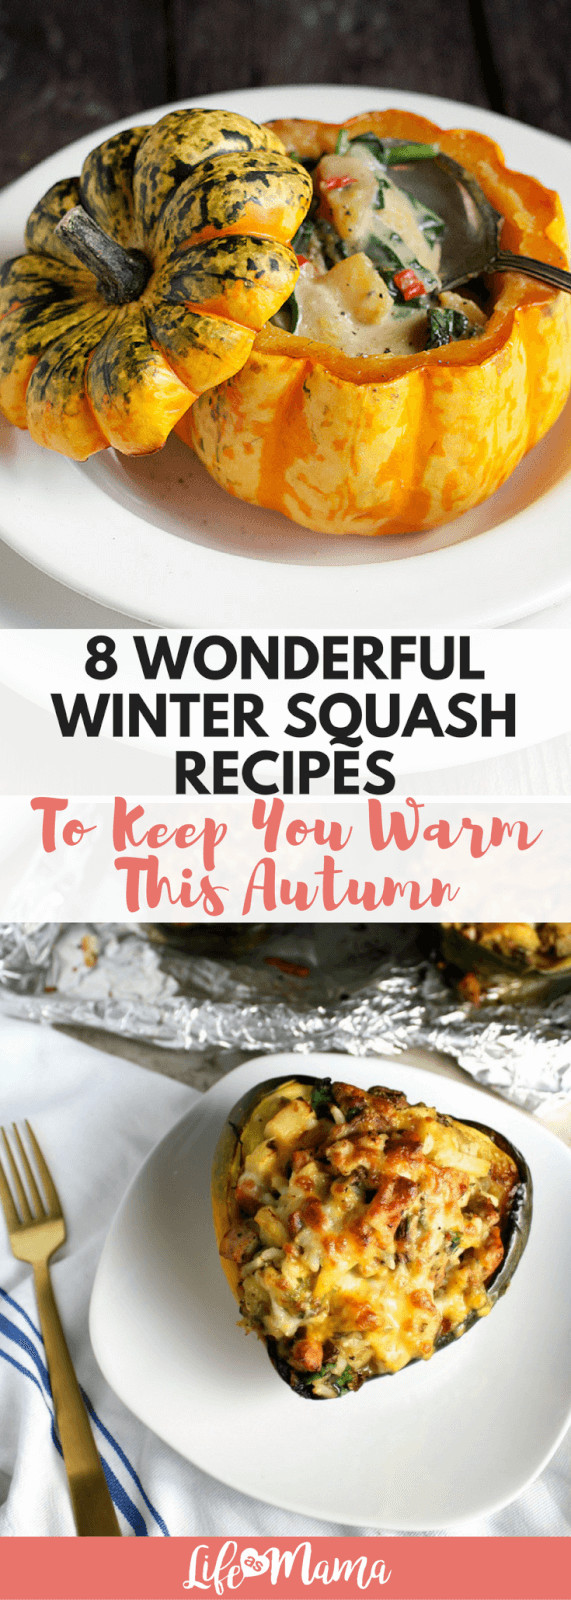 Winter Squash Recipes
 8 Wonderful Winter Squash Recipes To Keep You Warm This Autumn